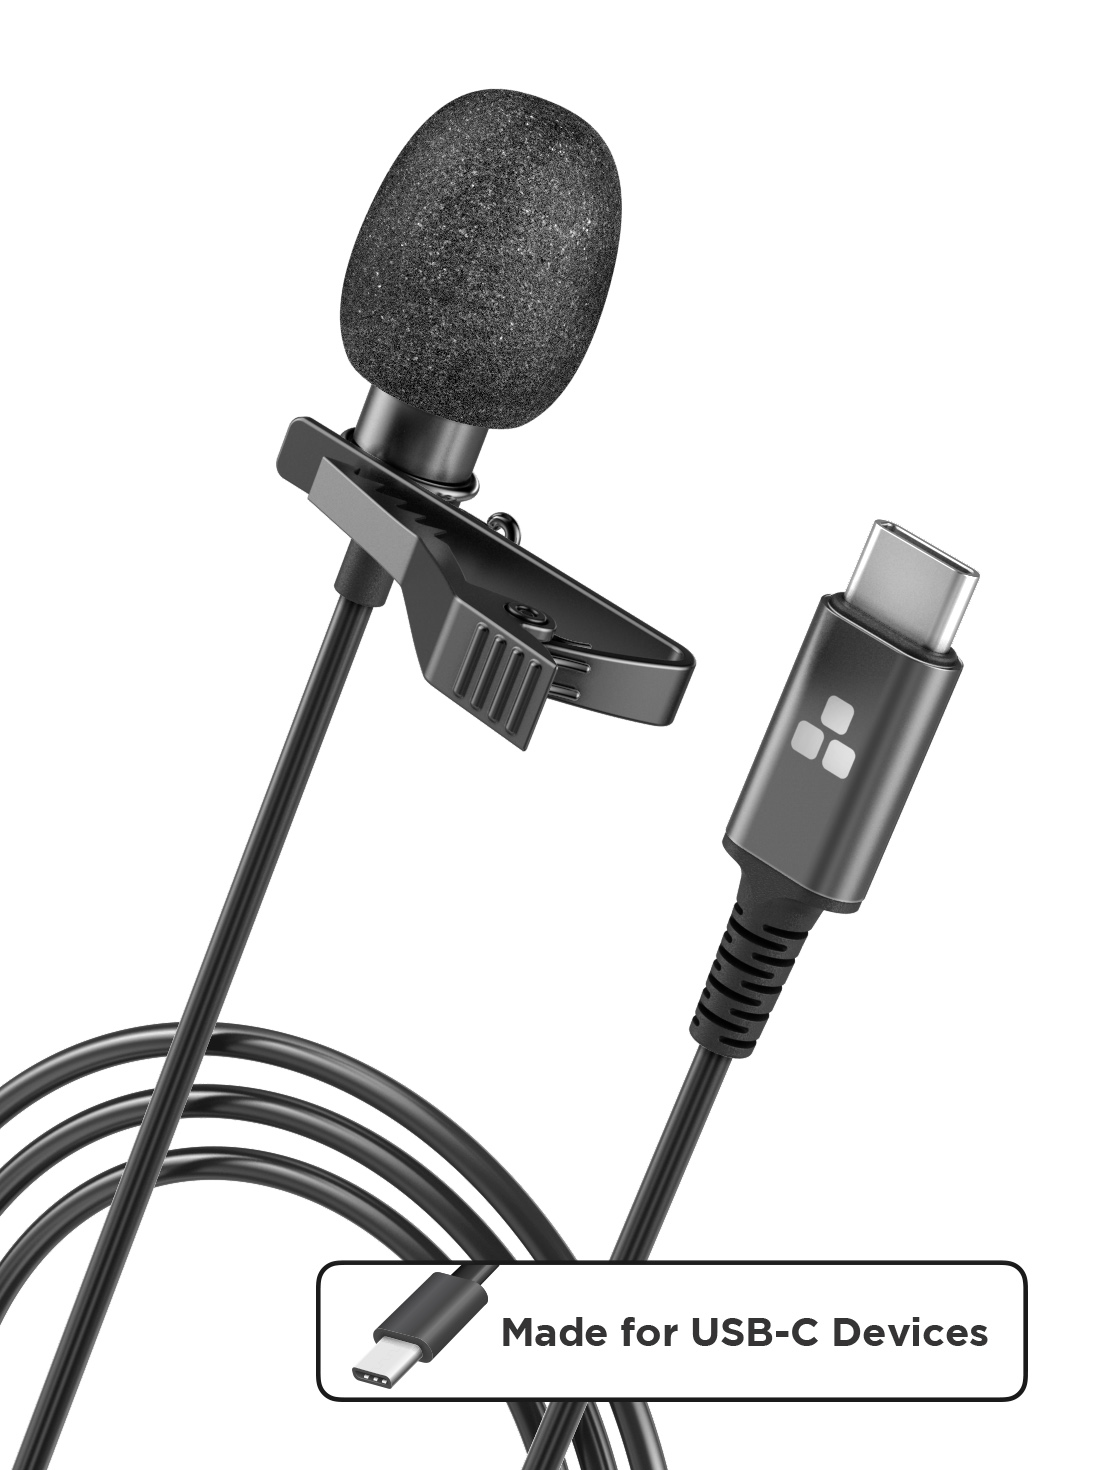 Drahtlose Lavalier / Clip-On Mikrofon für Smartphone - USB-C